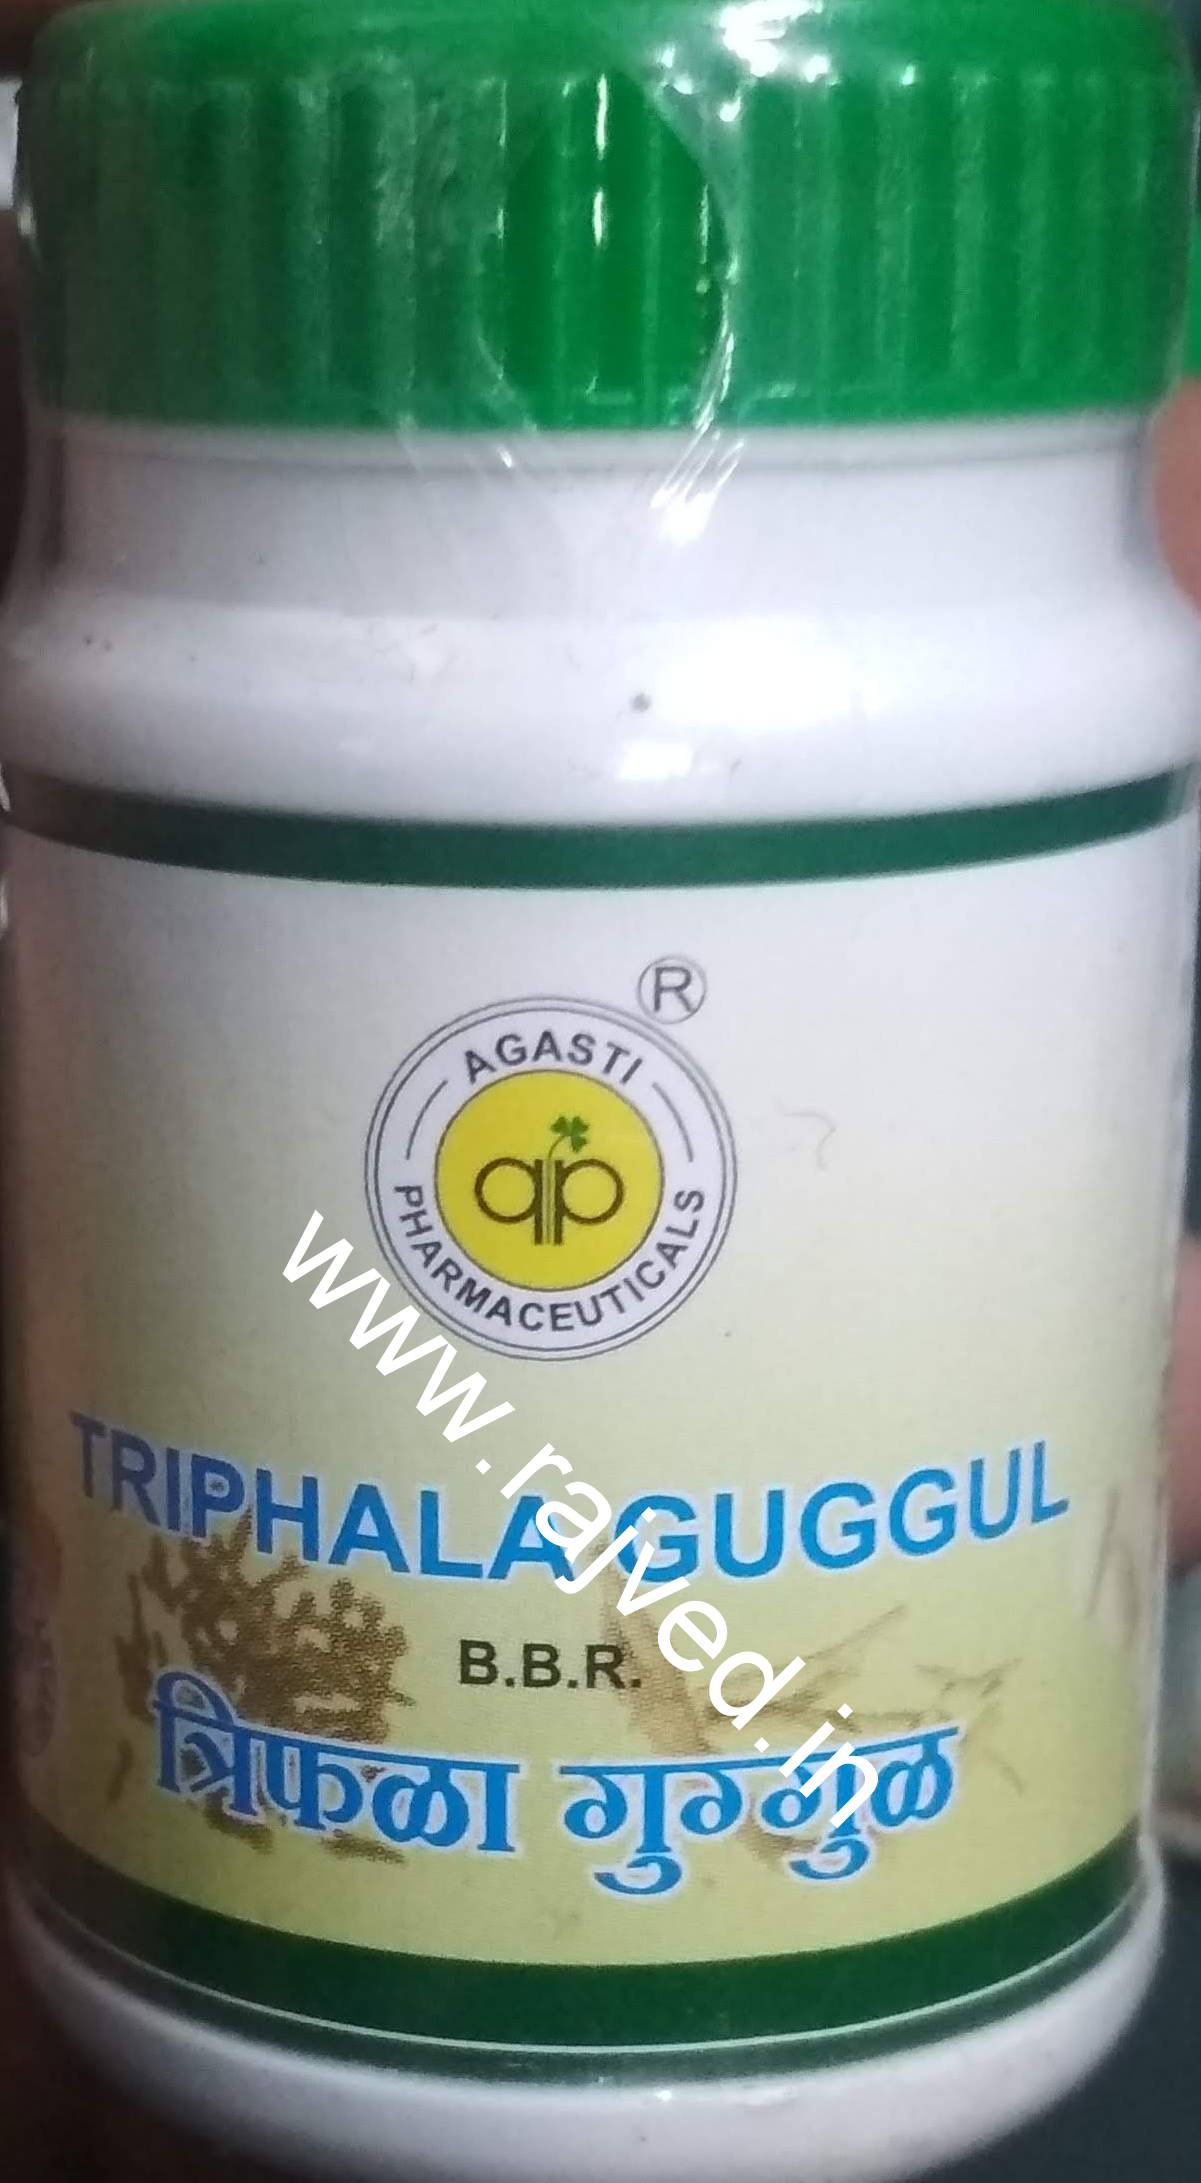 triphala guggul 1 kg 4000 tablet upto 15% off agasti pharmaceuticals